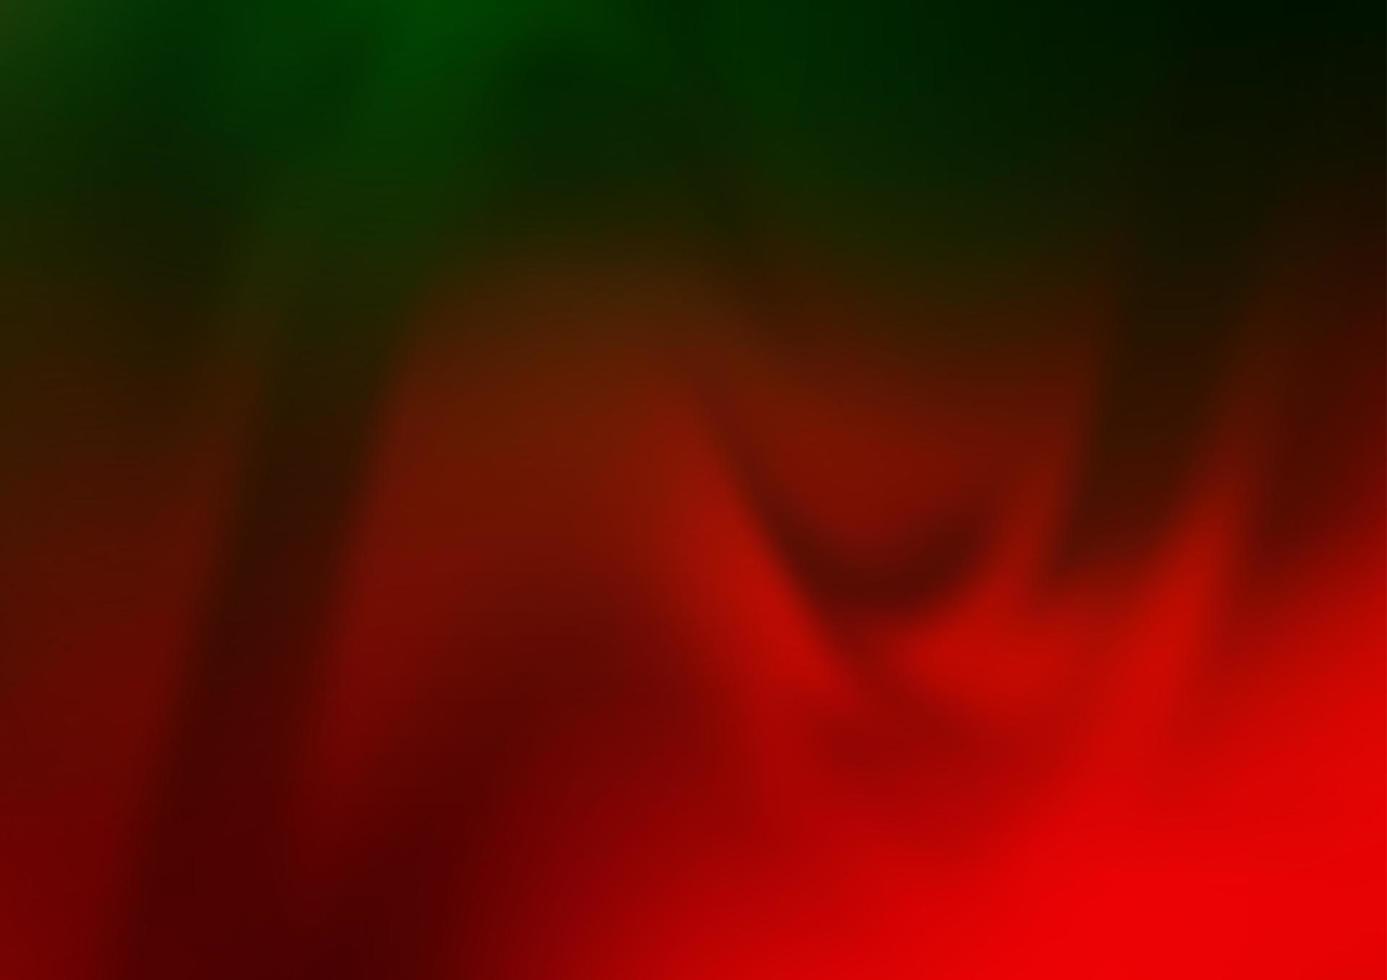 mörkgrön, röd vektor suddig glans abstrakt mall.